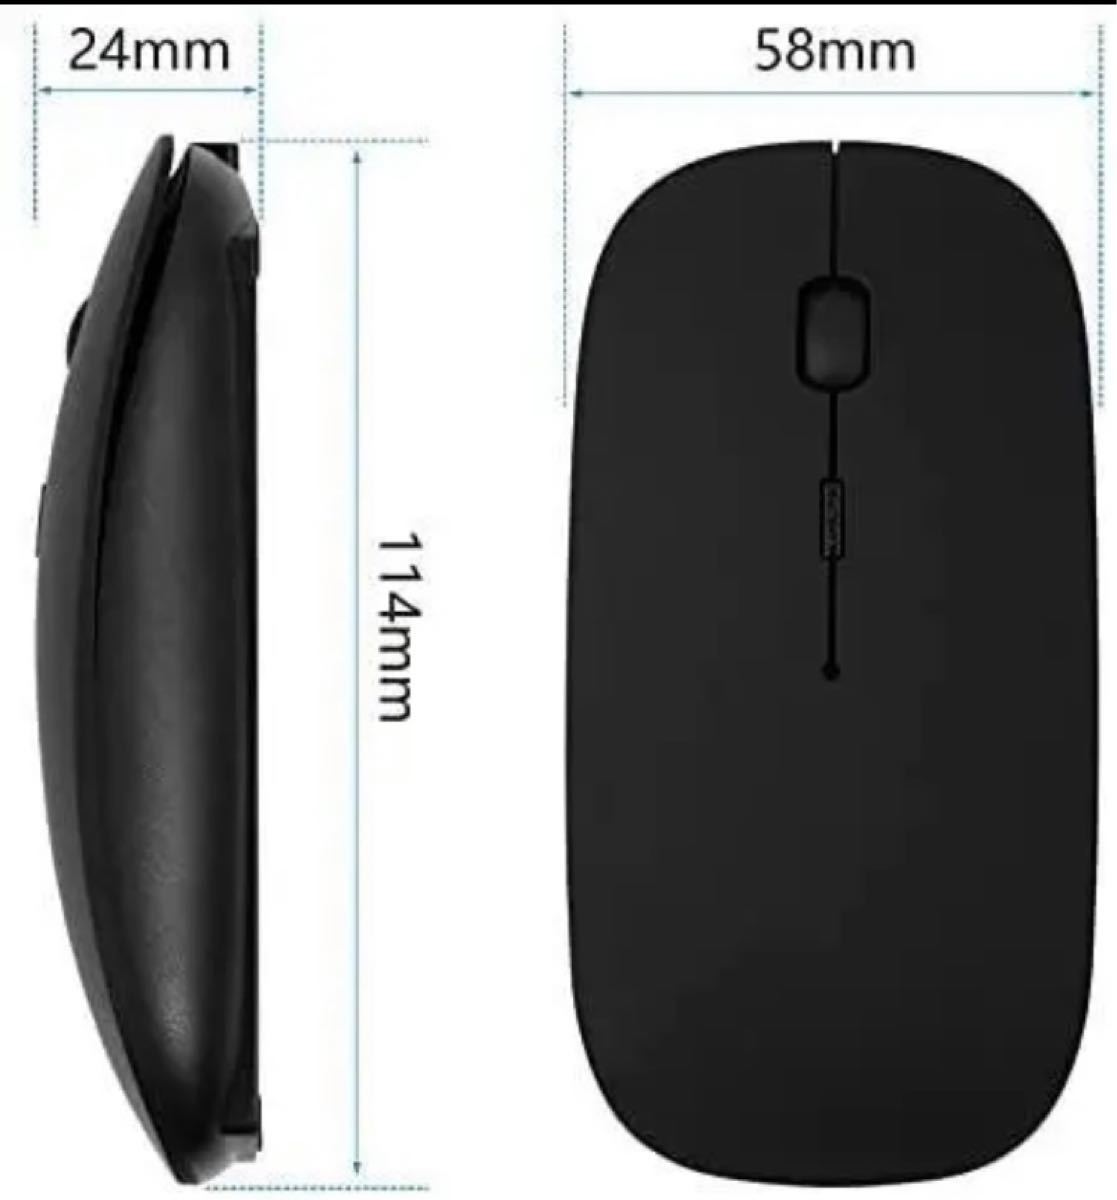 179★Pufier ワイヤレスマウス Bluetooth ワイヤレスマウス